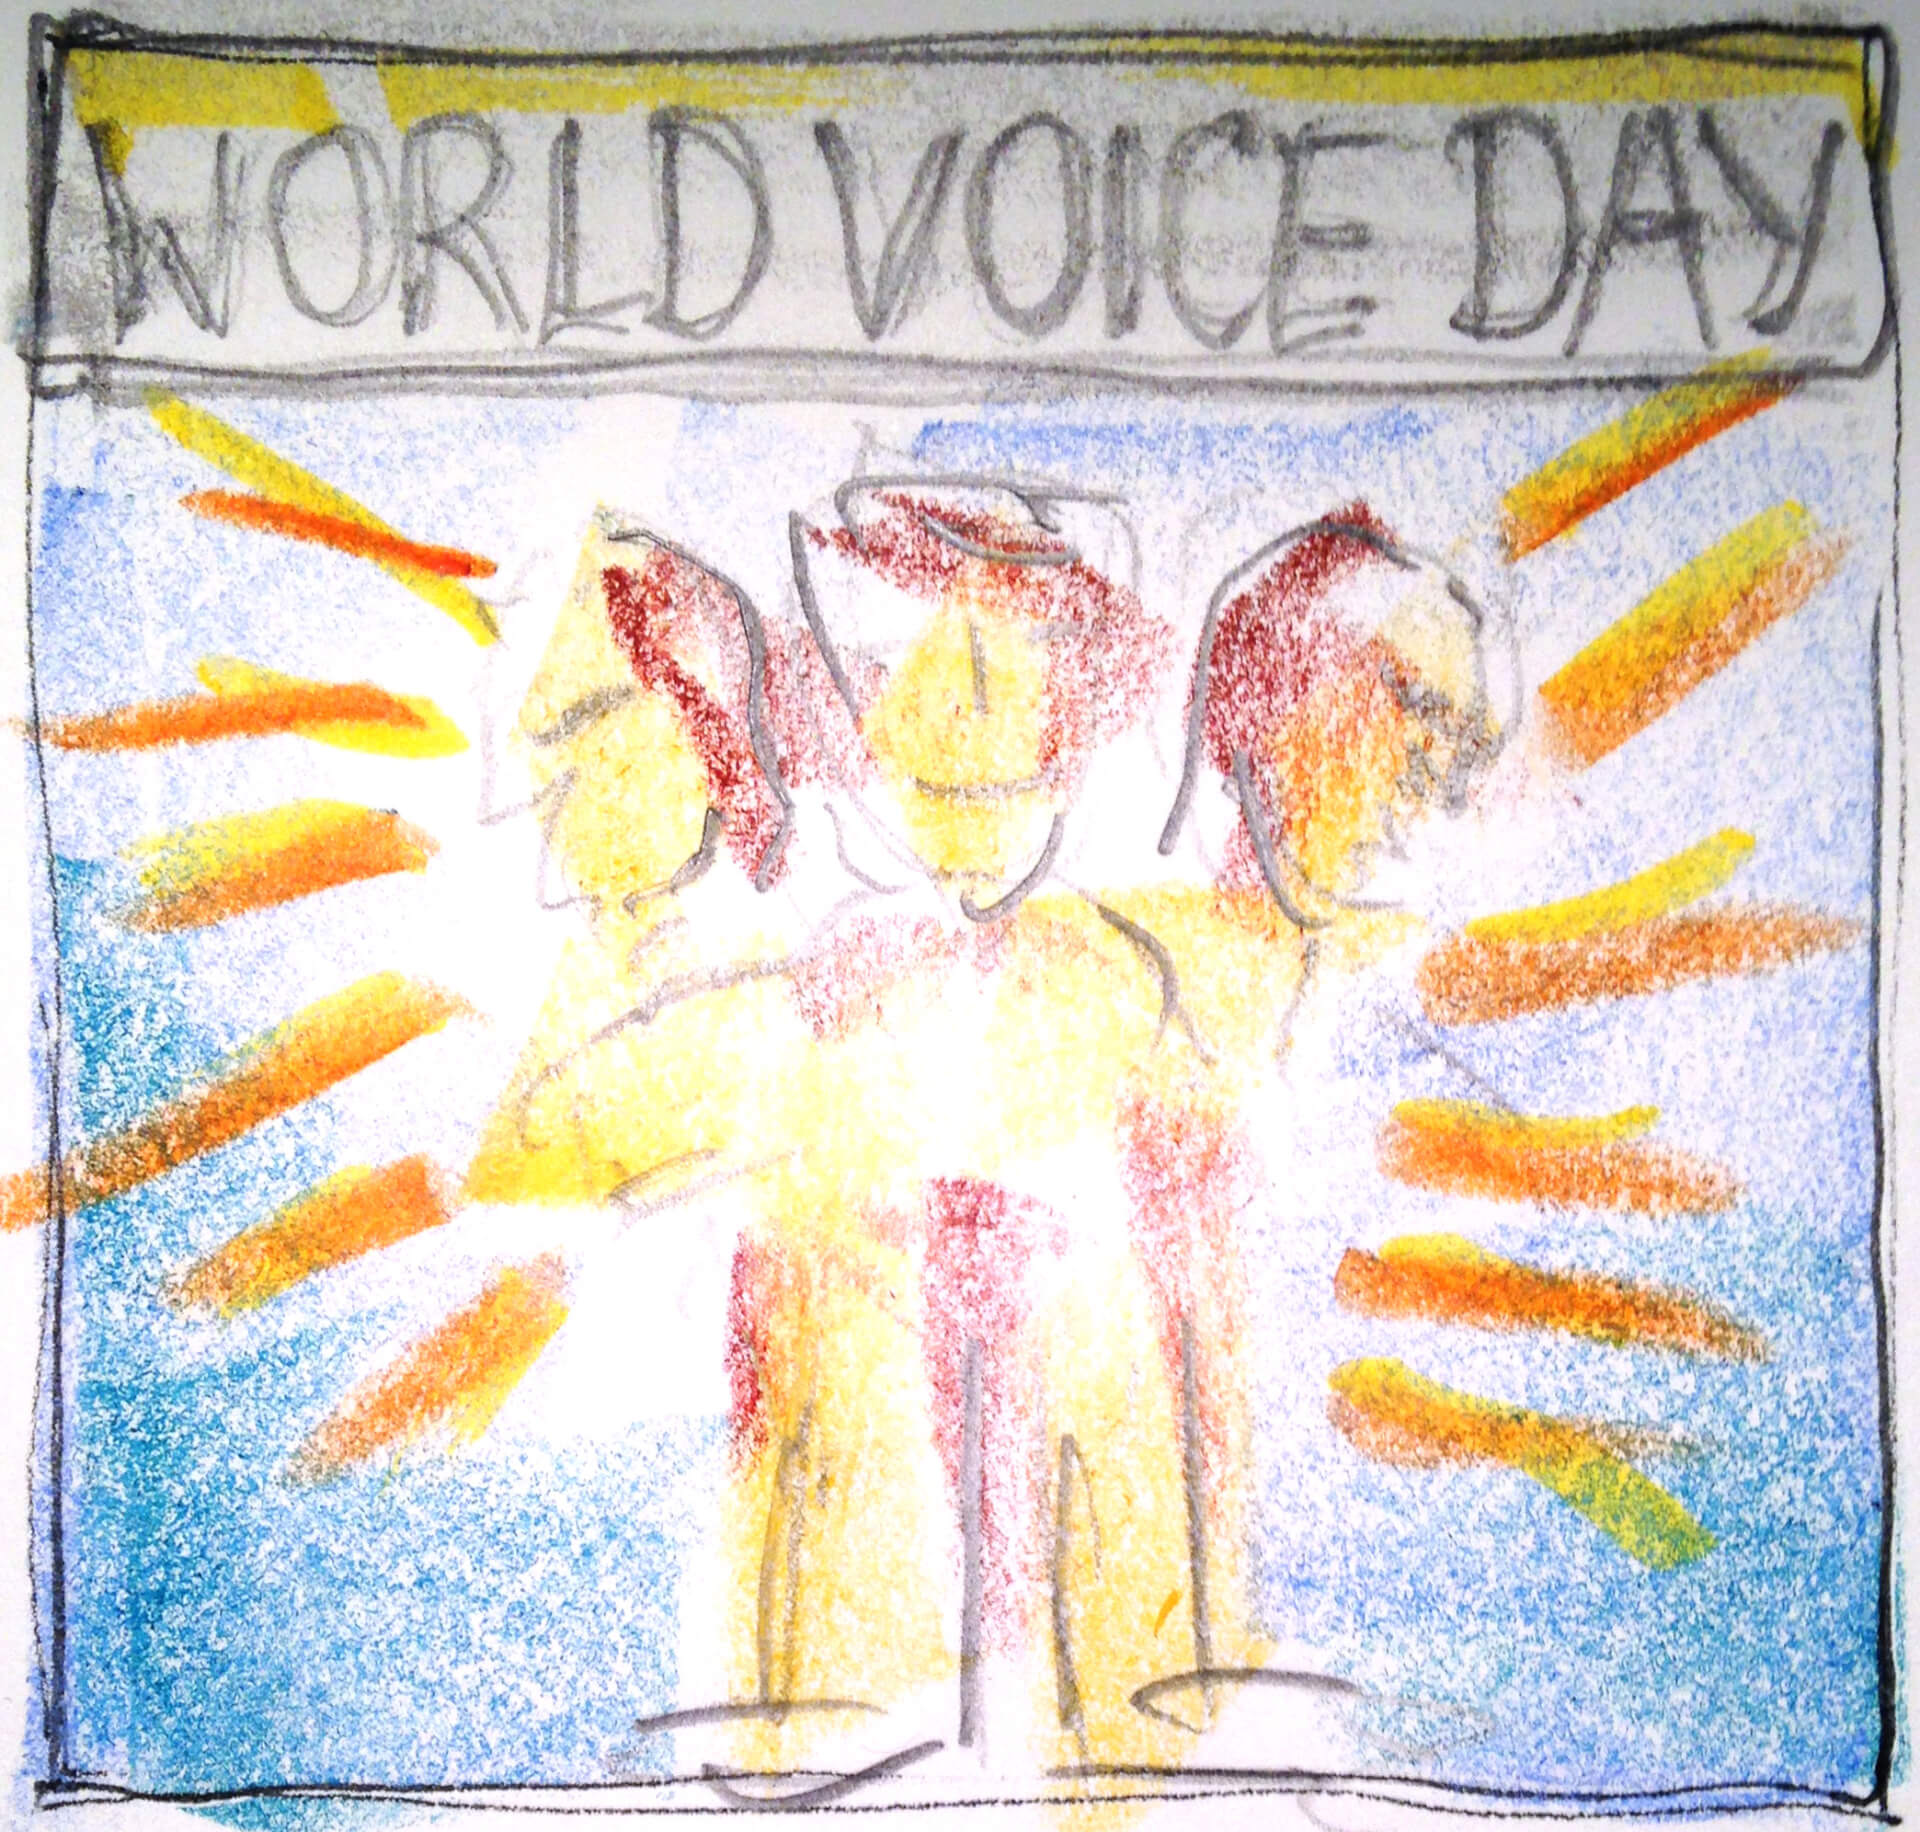 BLOG-ILLU_World-Voice-Day